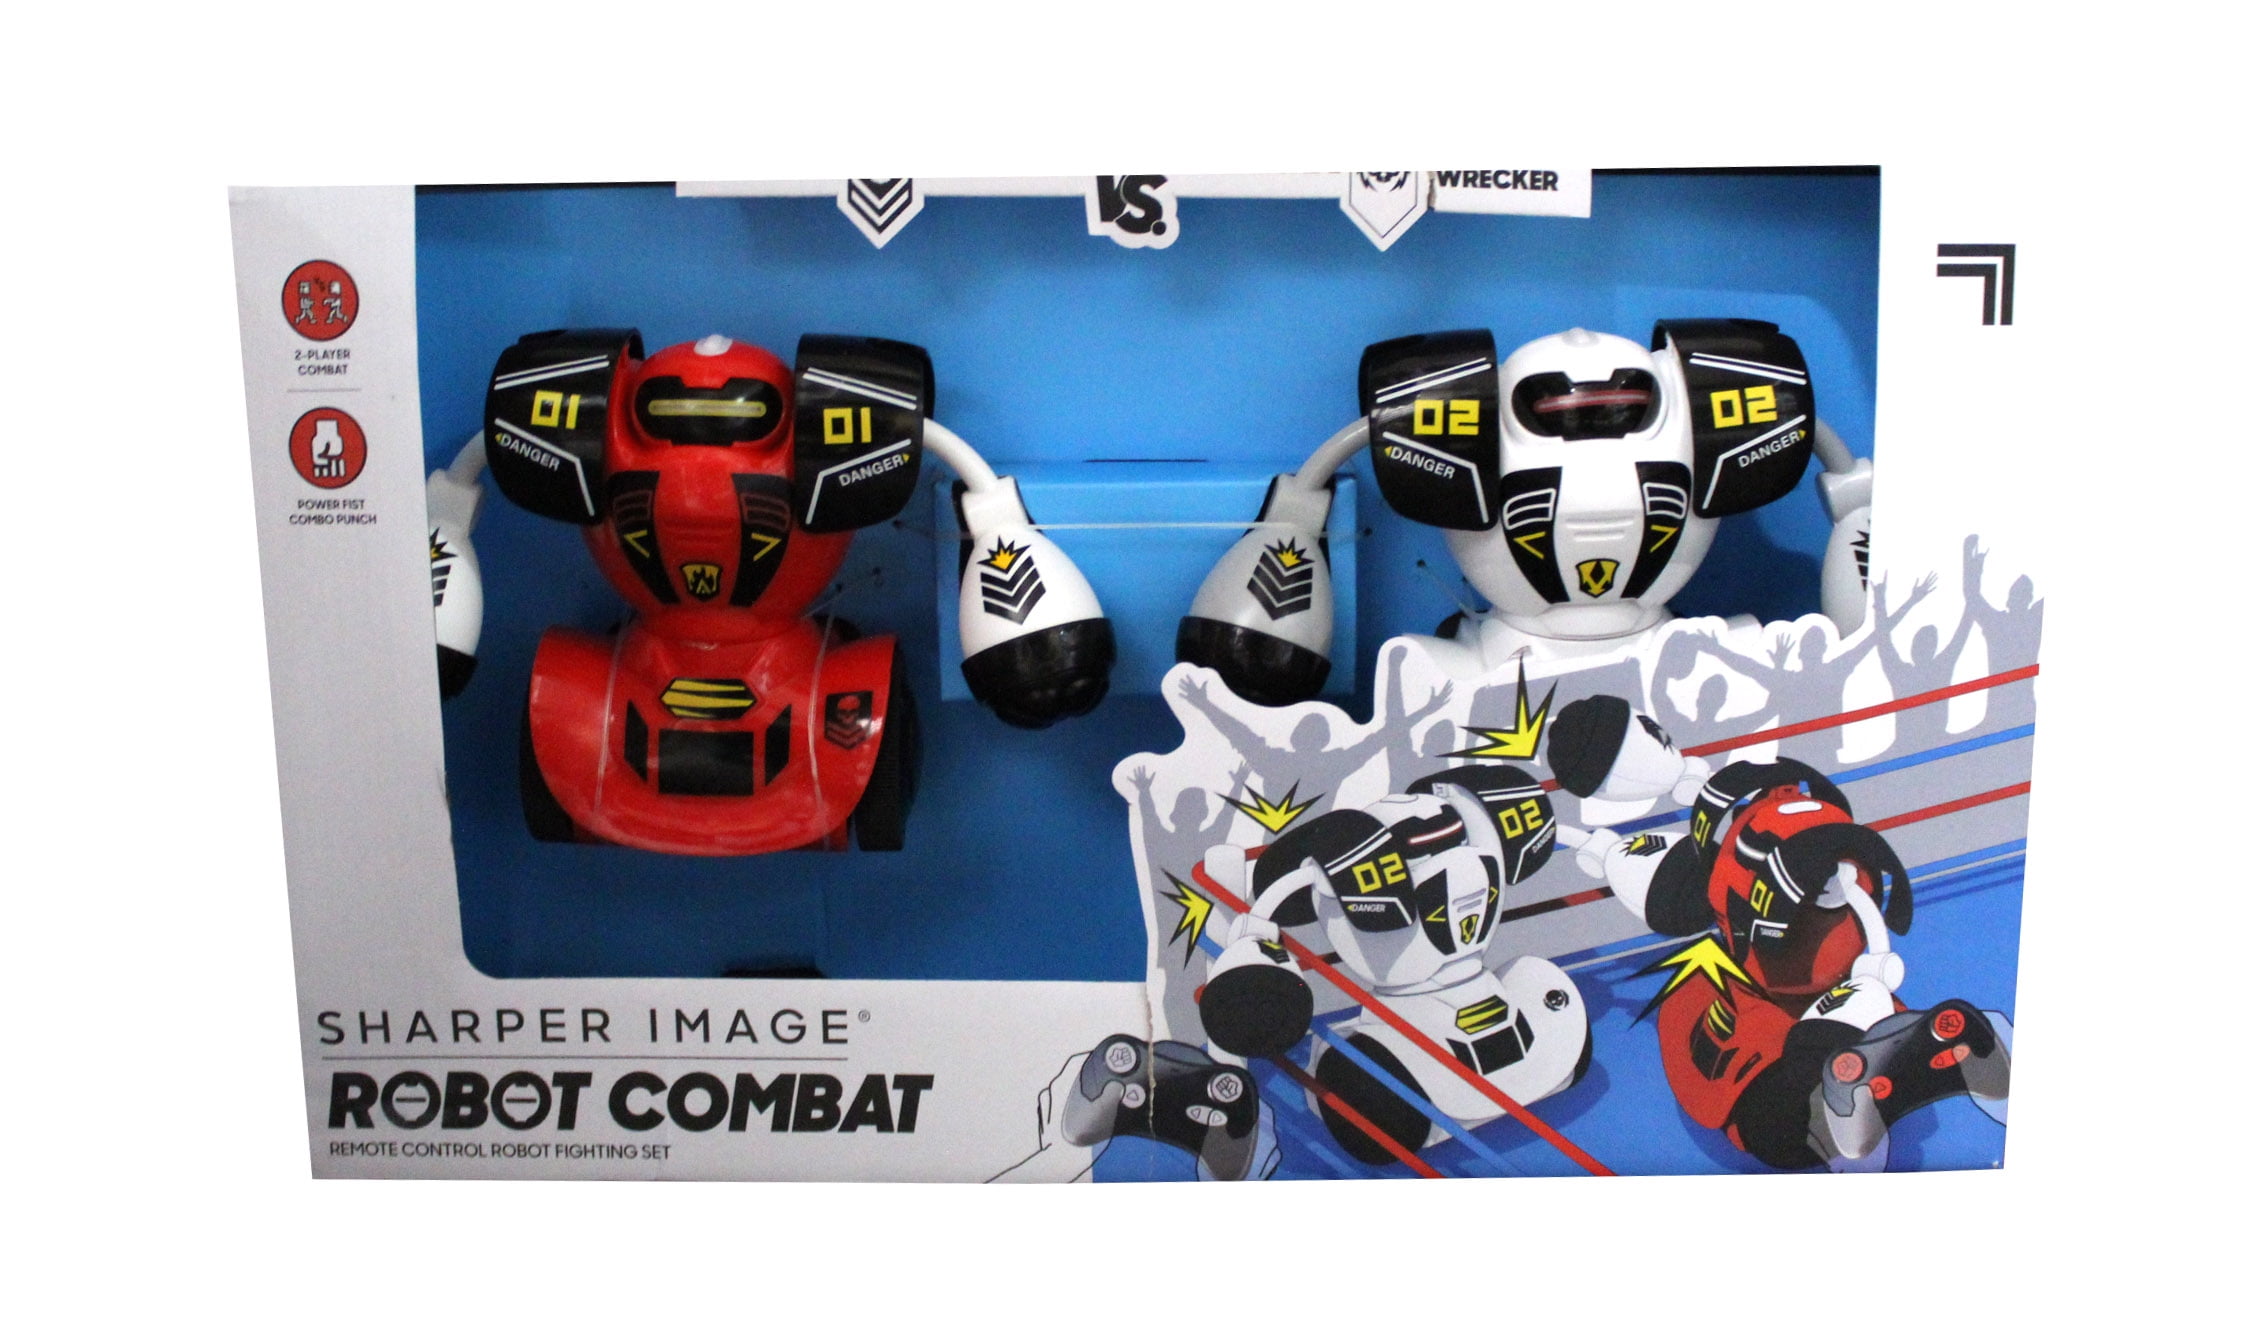 Sharper Image Robot Combat Remote Control Robot Fighting Set